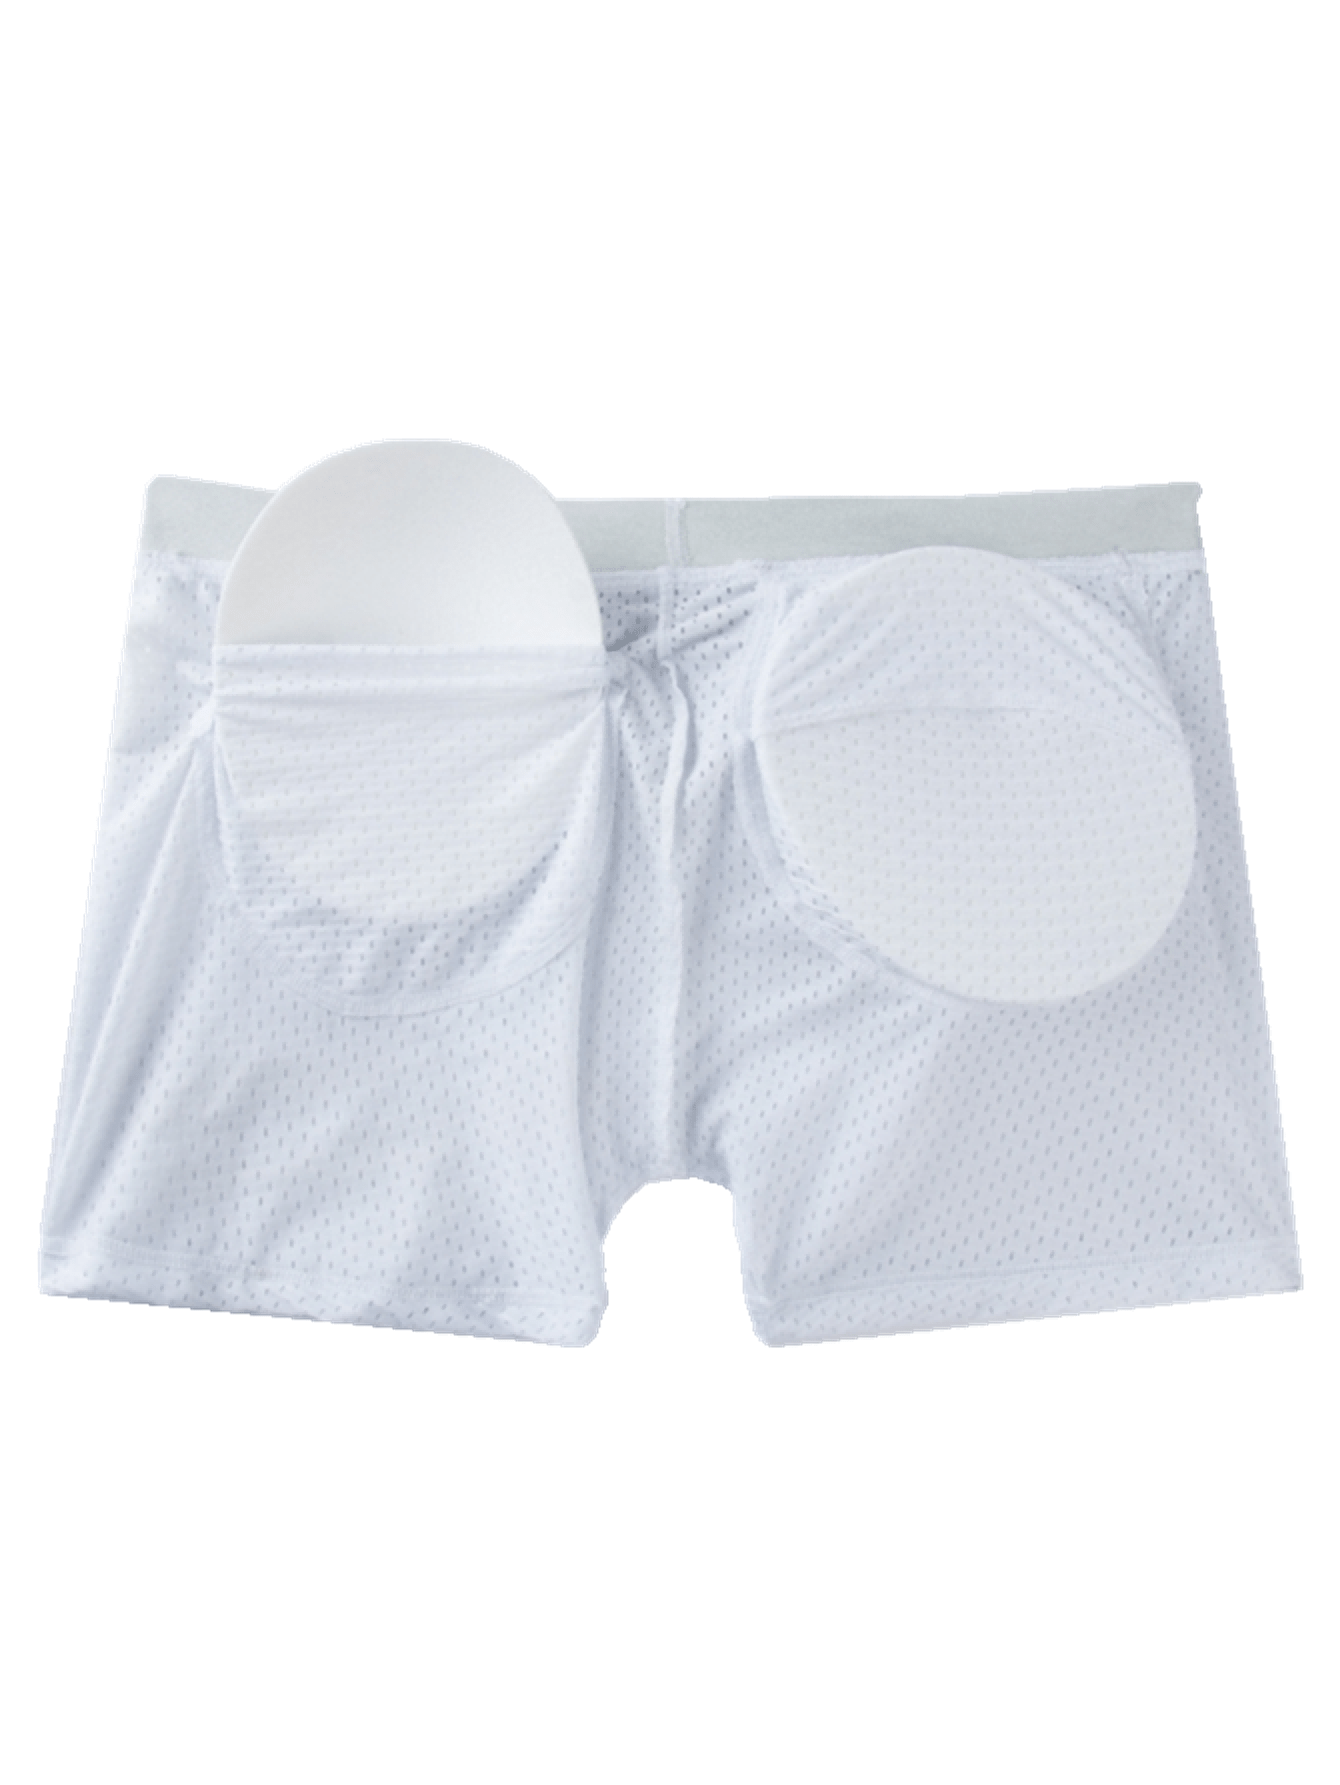 Sexy Men's Padded Underwear Mesh Boxer Buttocks Lifter Butt Push